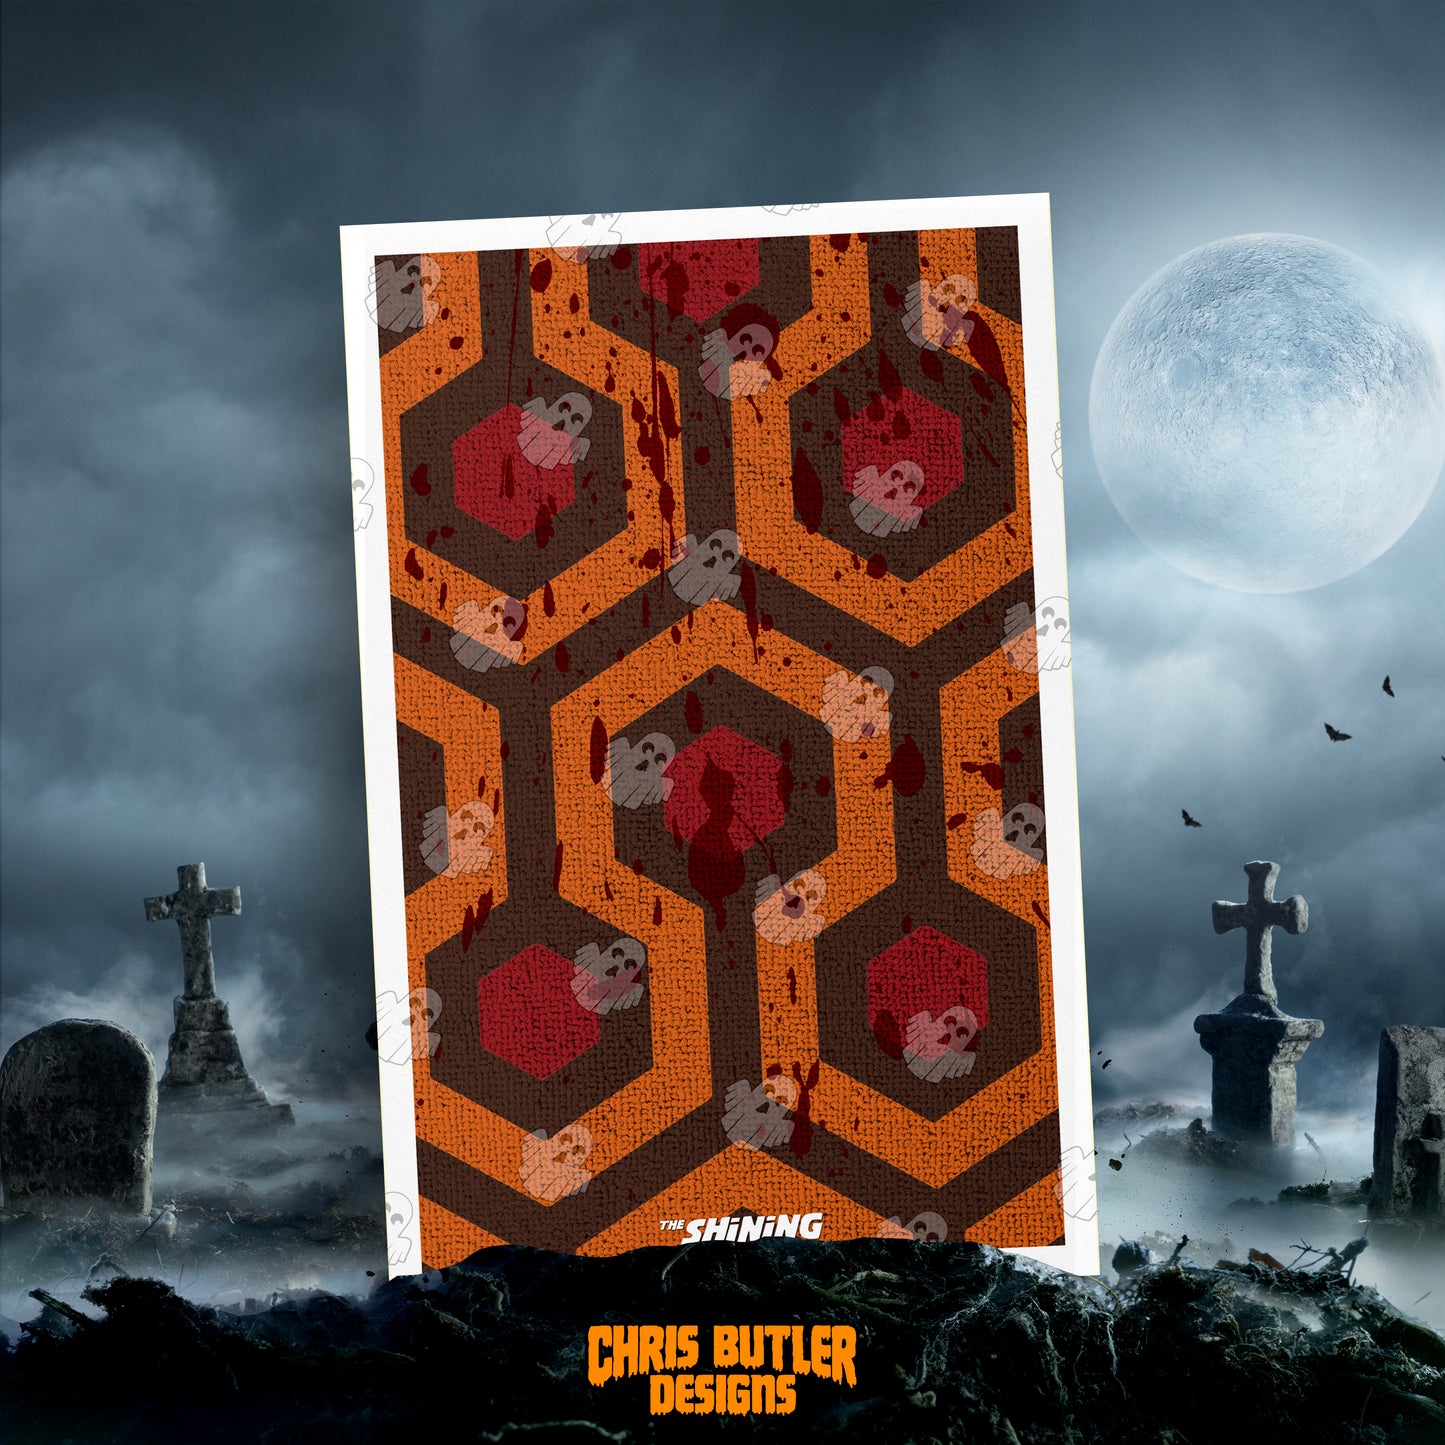 The Shining (Carpet Design) 11x17 Alternative Movie Poster